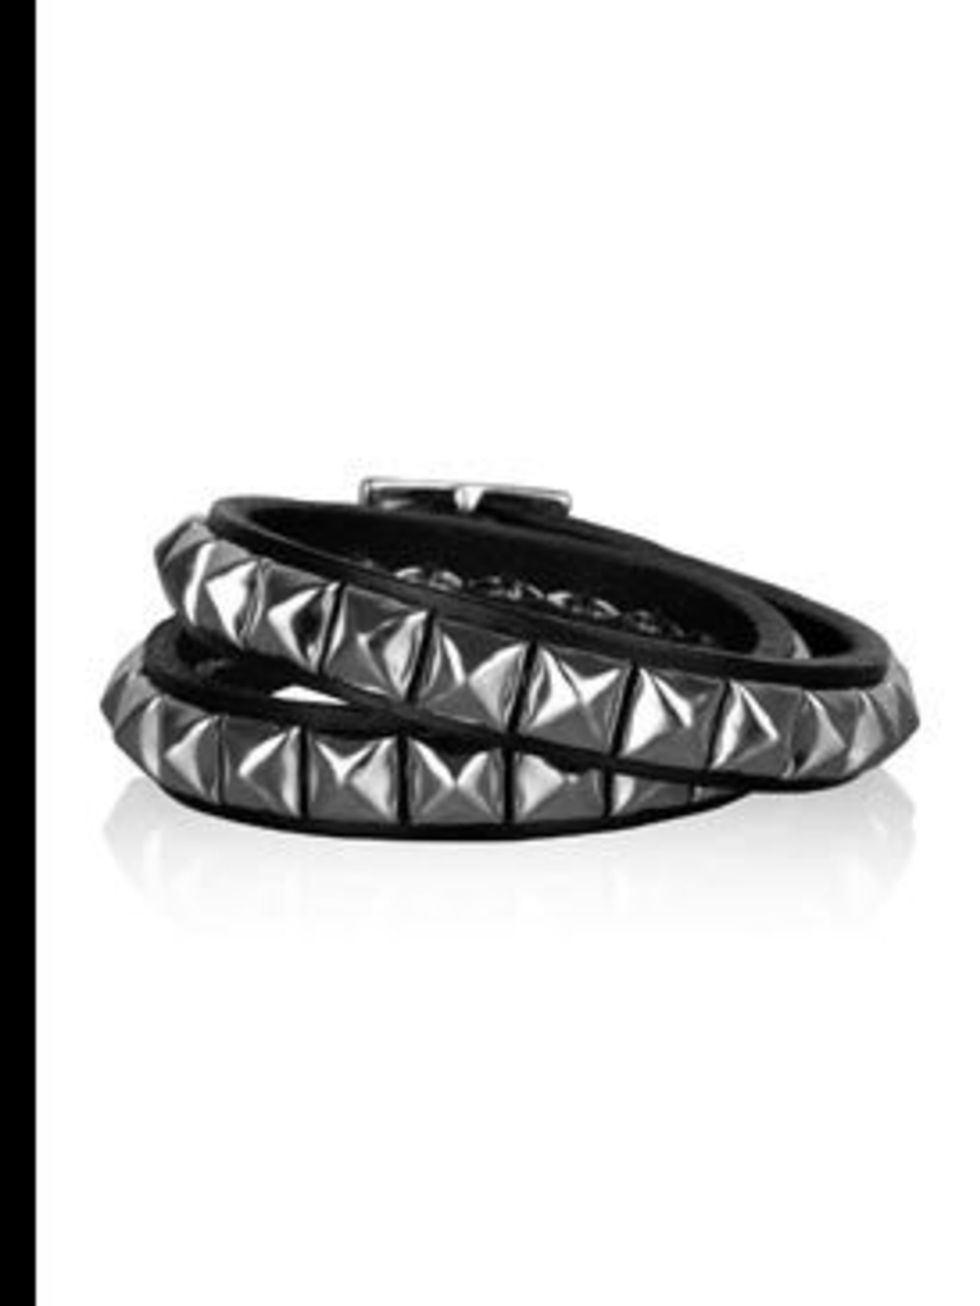 <p>Bracelet, £35 by One Grey Day at <a href="http://www.my-wardrobe.com/one-grey-day/black-nailhead-leather-strap-bracelet-653935">My-Wardrobe</a></p>